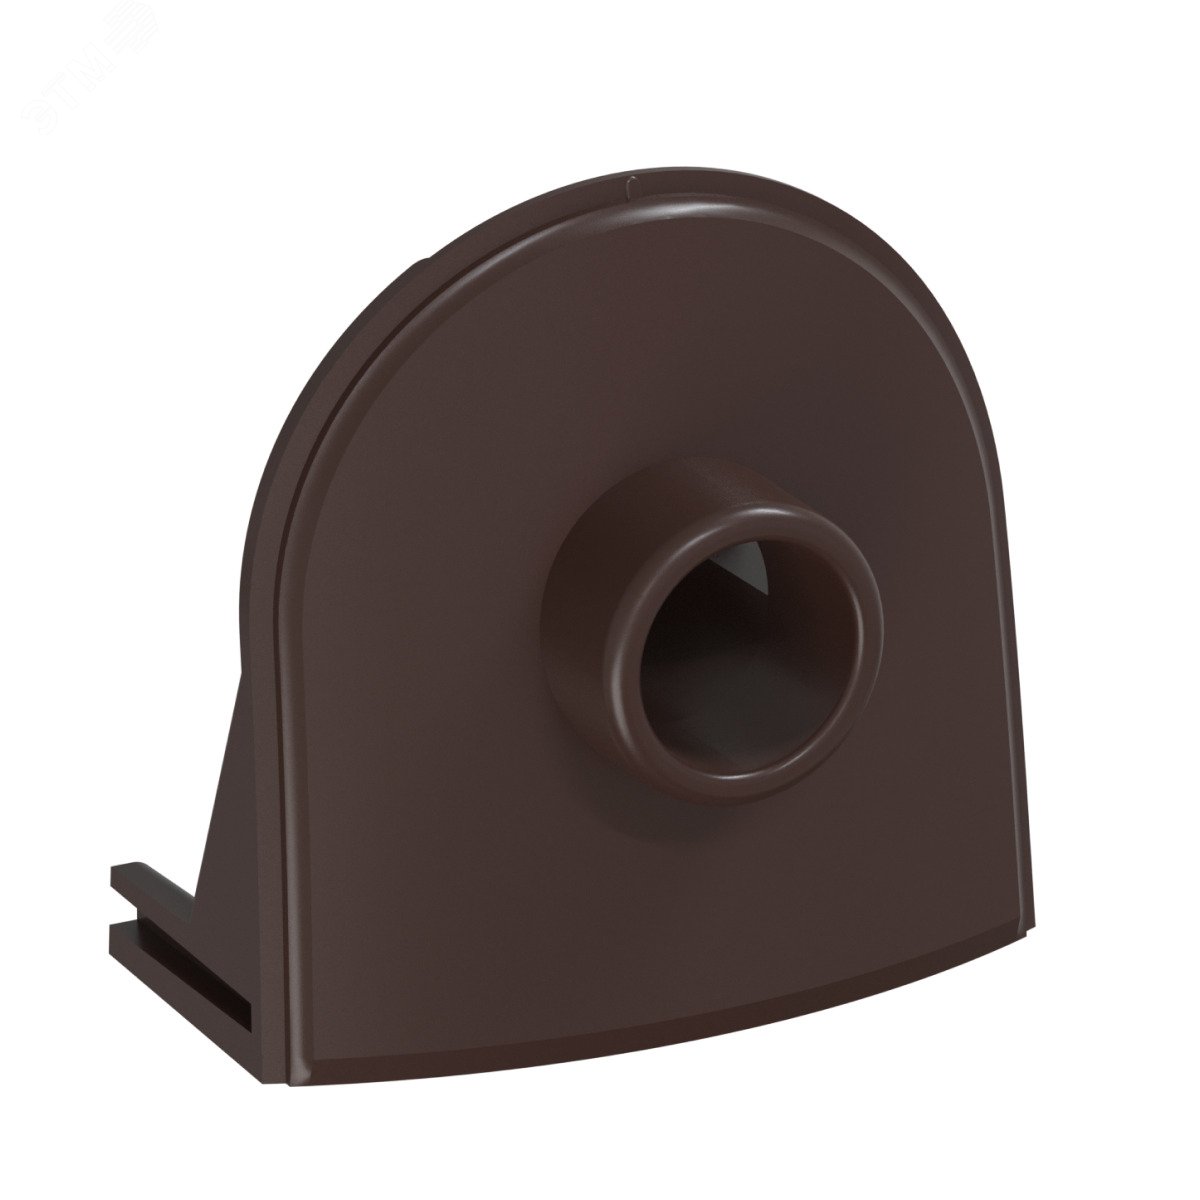 Ввод в распред. коробку для ретро-провода Rotondo, цвет коричневый (в упаковке 4шт) 7700928 OneKeyElectro